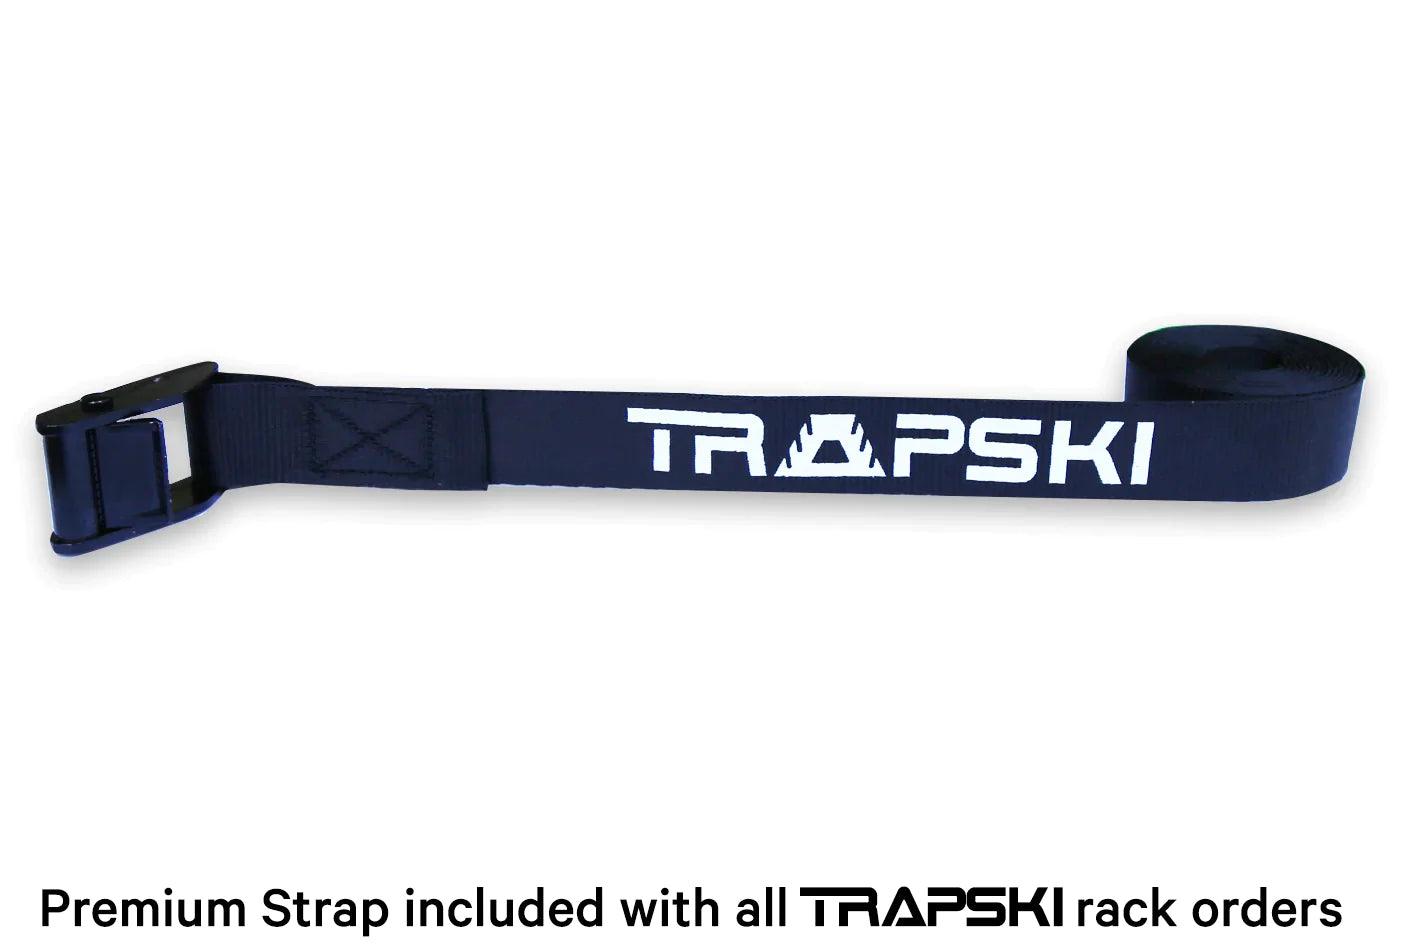 TRAPSKI DOUBLE Wide Stance Snowboard Rack